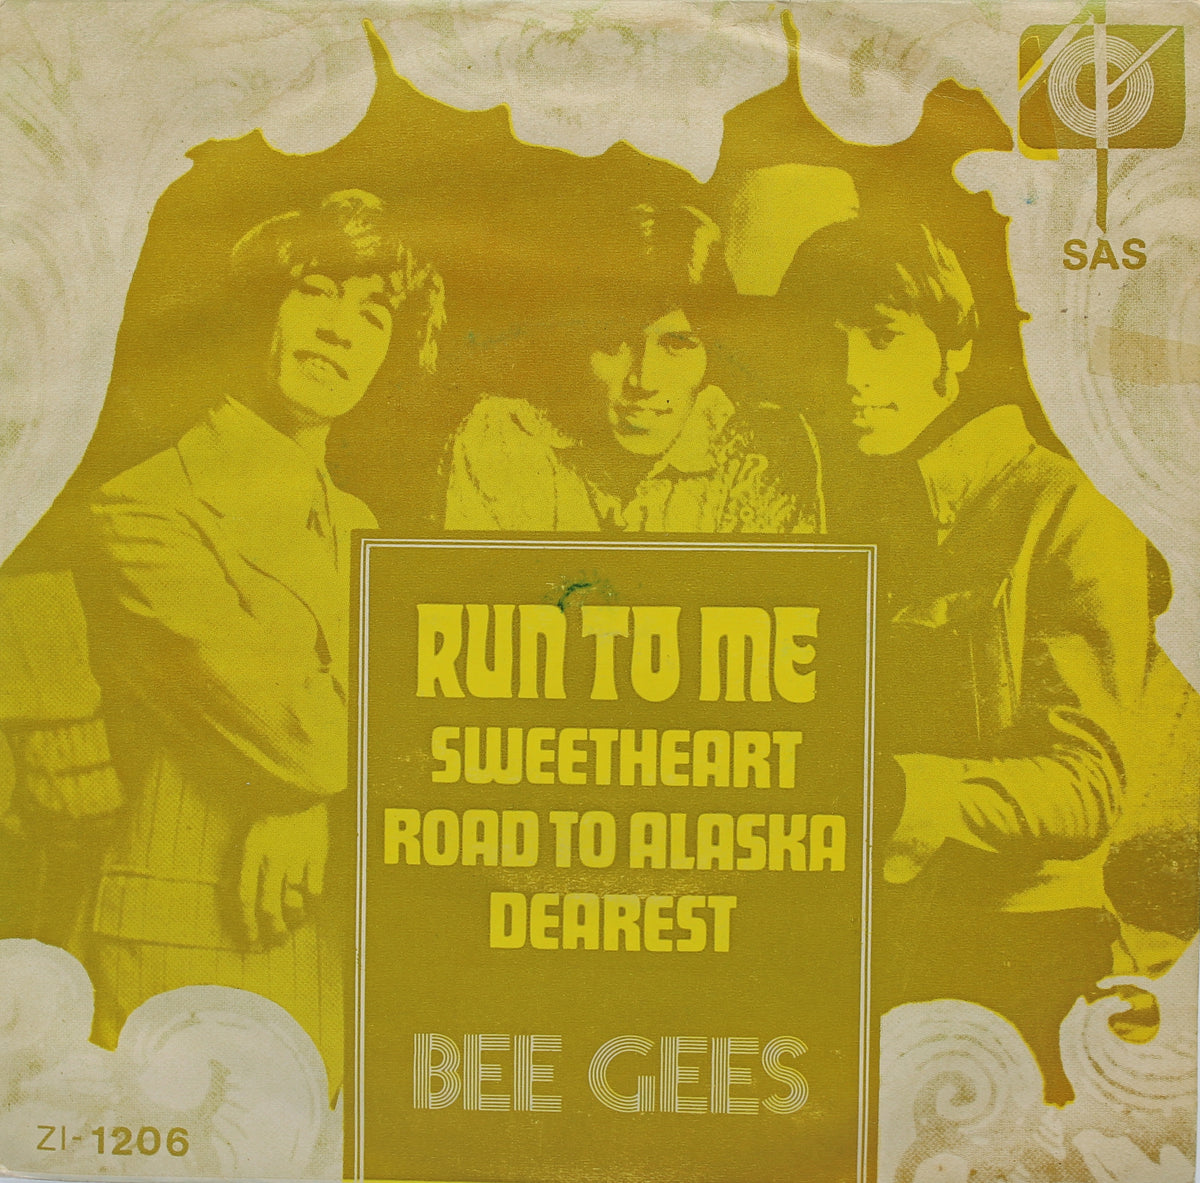 Bee Gees - Run To Me, Vinyl EP 45rpm, Thailand